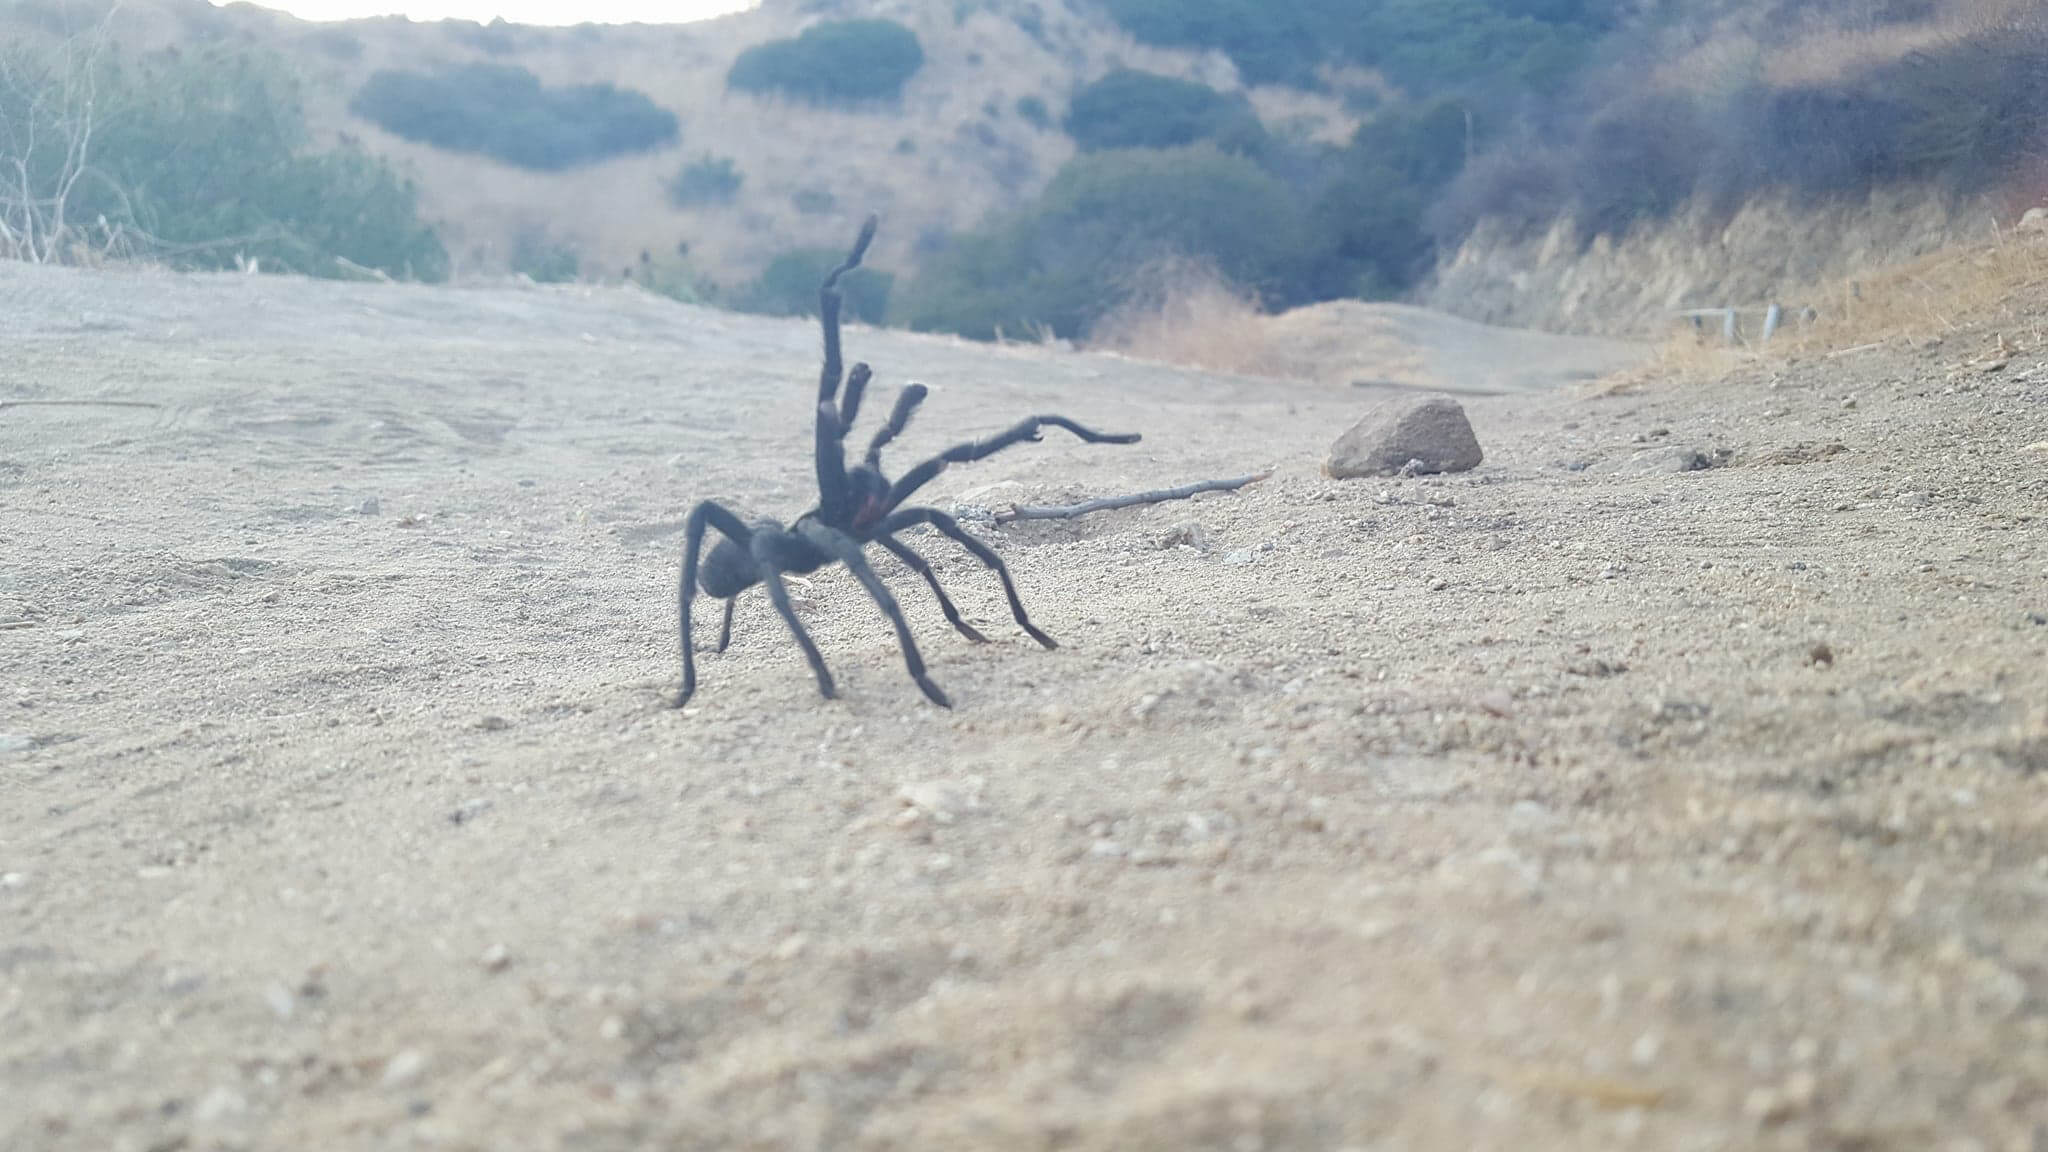 tarantula in the desert